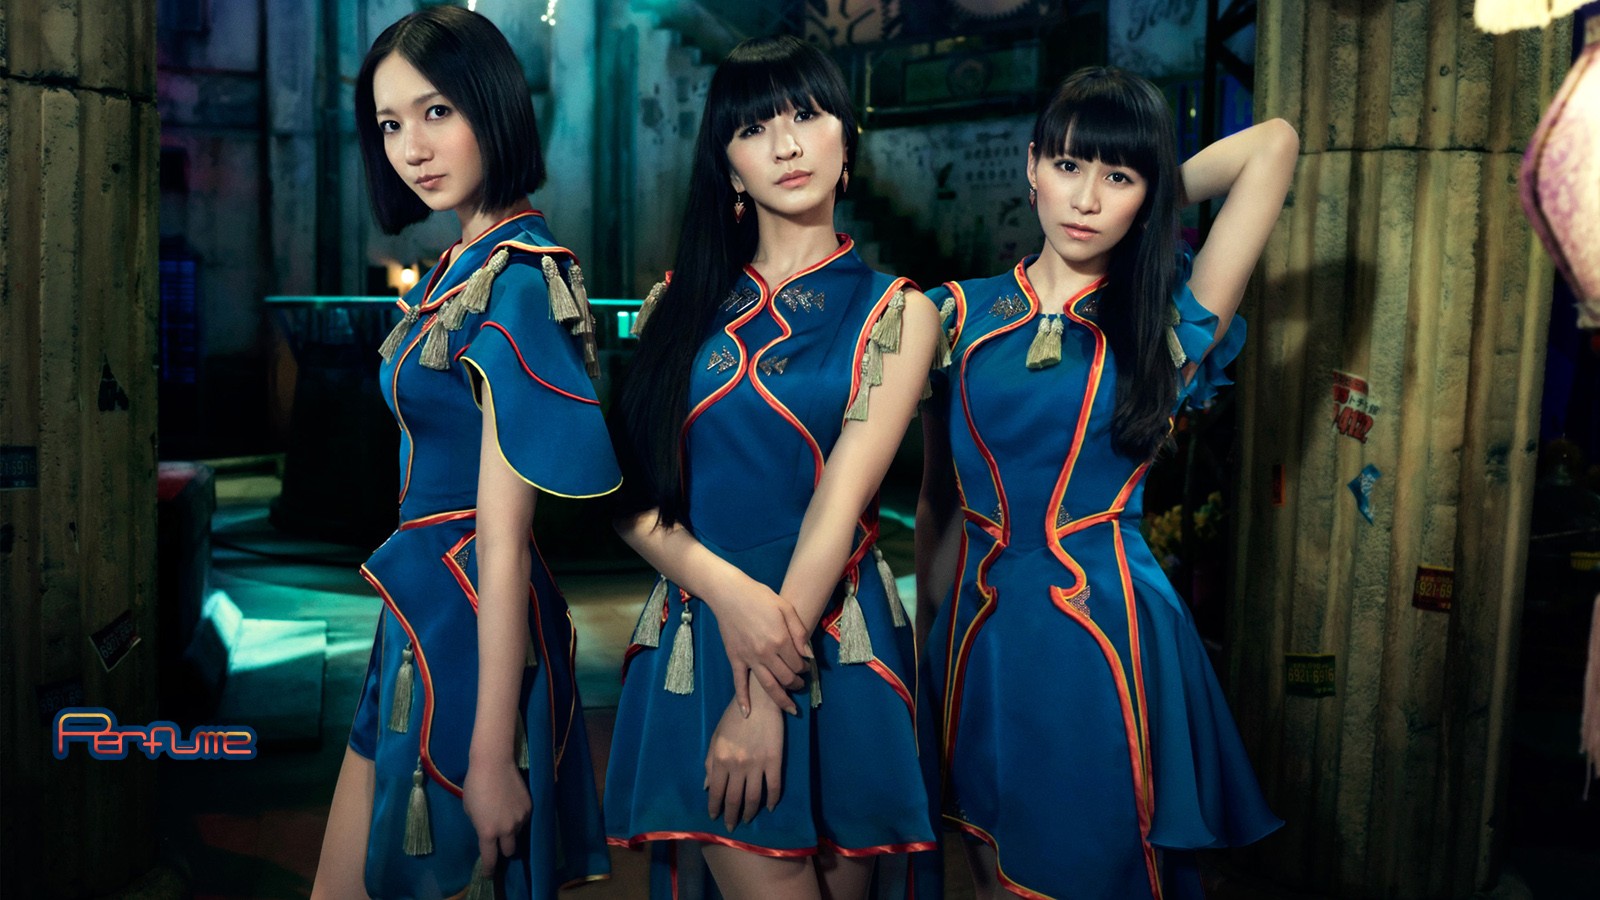 People 1600x900 Perfume (Band) costumes J-pop women Asian women trio music looking at viewer black hair Japanese women